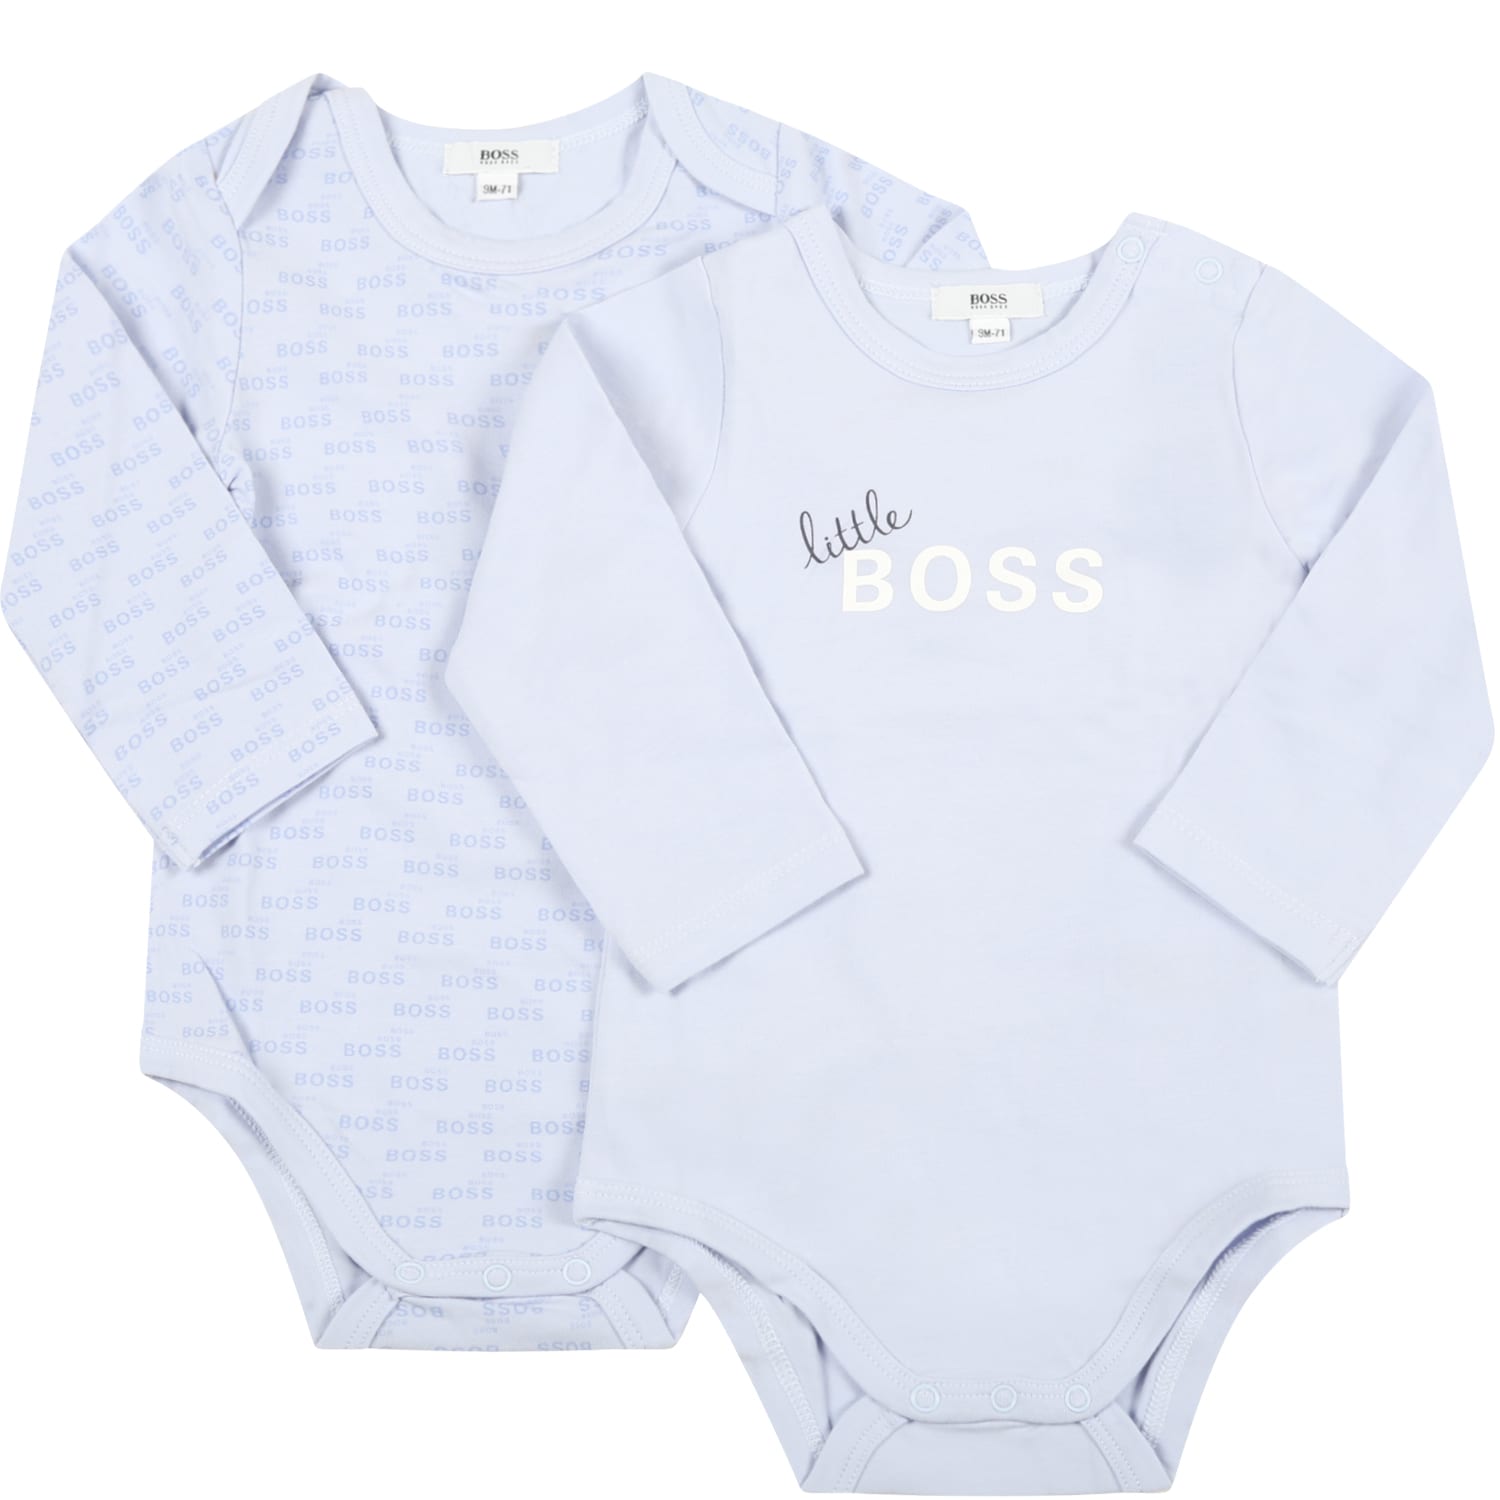 Hugo Boss Light Blue Set For Baby Boy With Logos